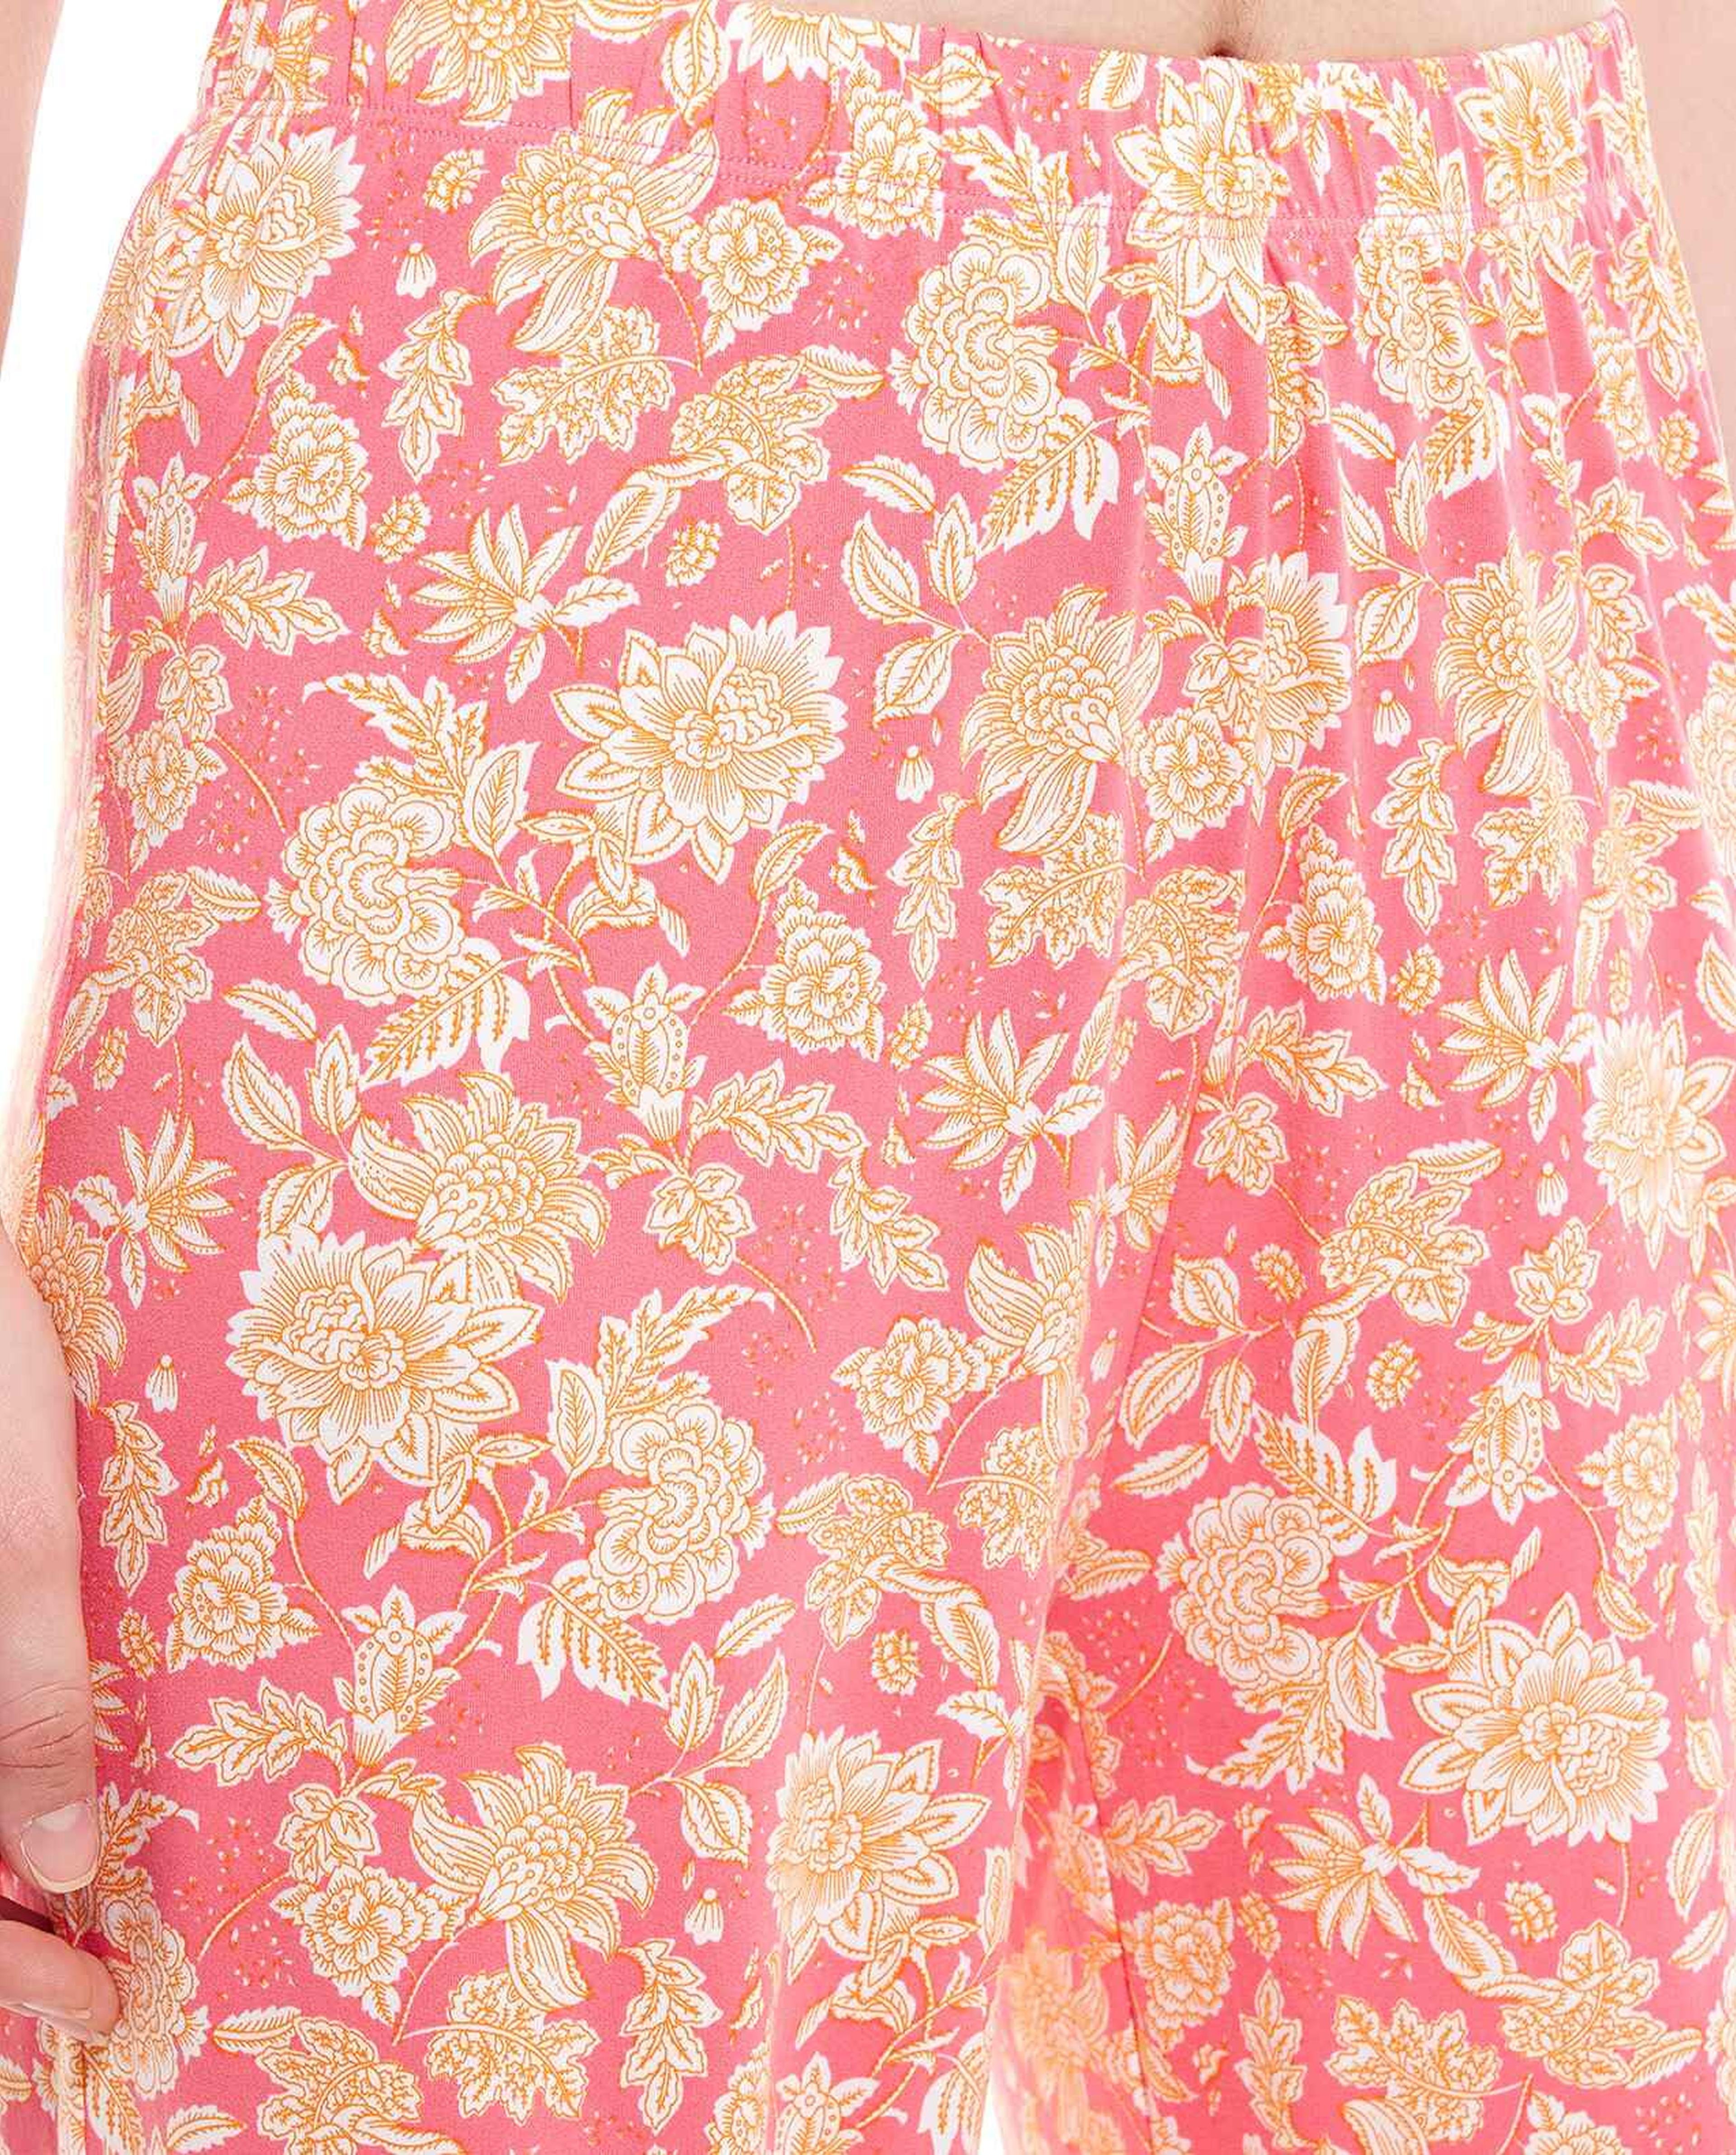 Floral Printed Pajama Set with Short Sleeves